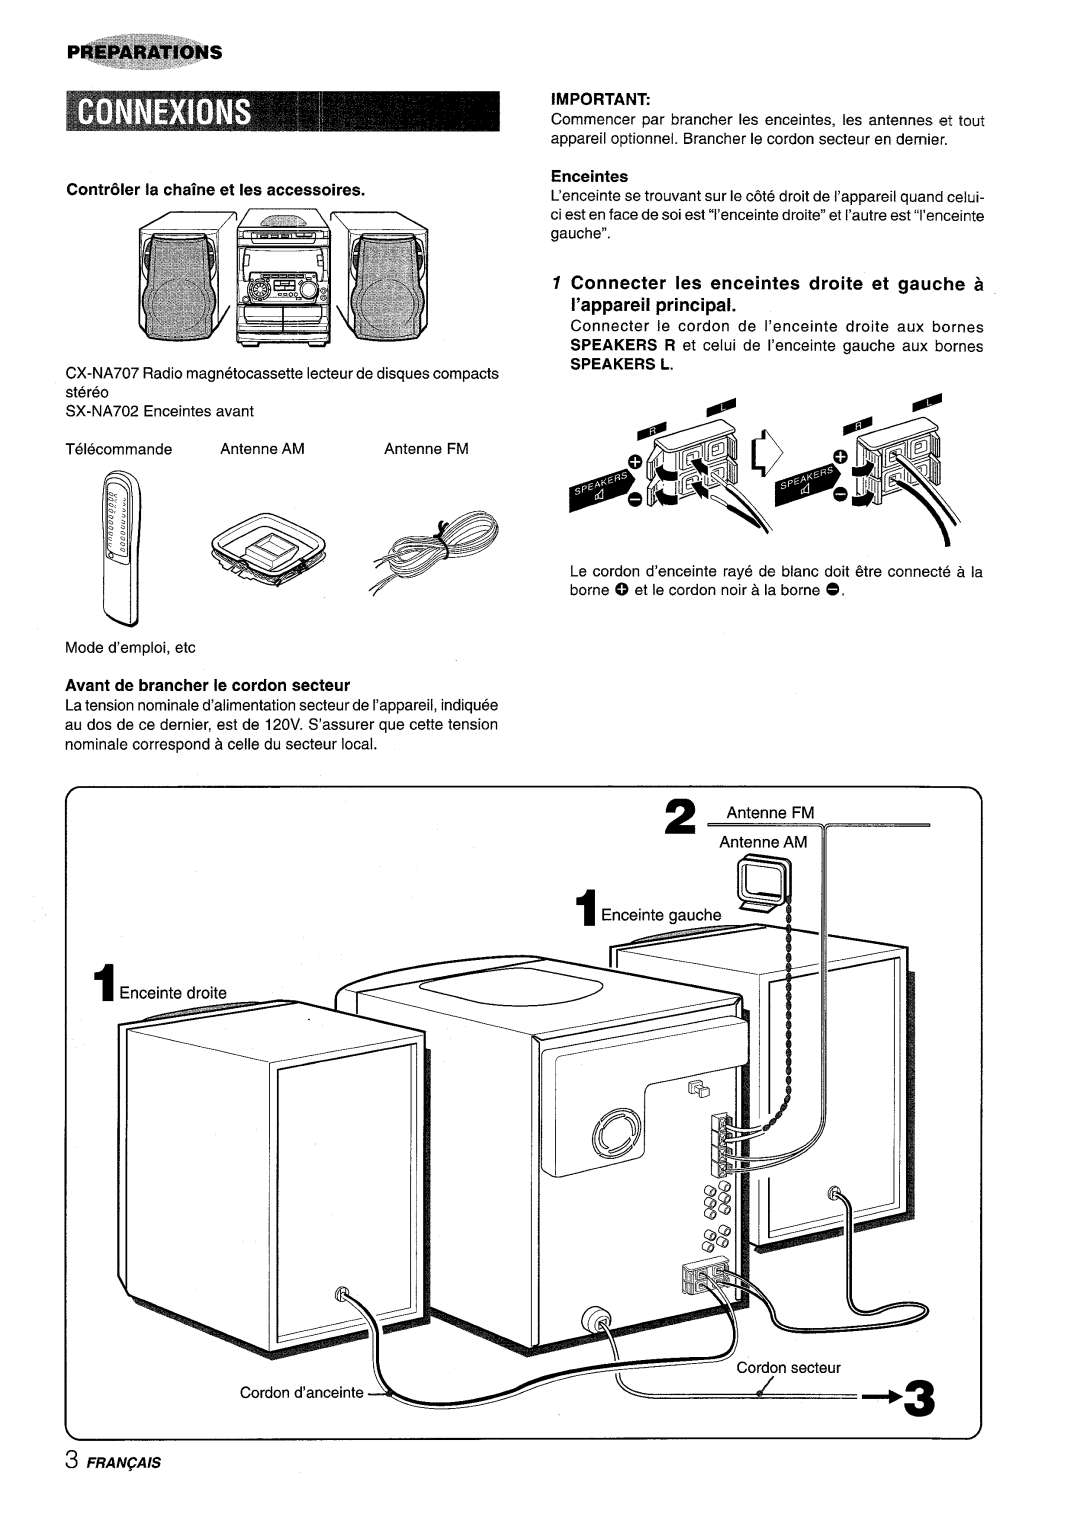 Sony NSX-A707 manual Connecter Ies enceintes droite et gauche a I’appareii principal, Speakers L, stereo, Enceintes 